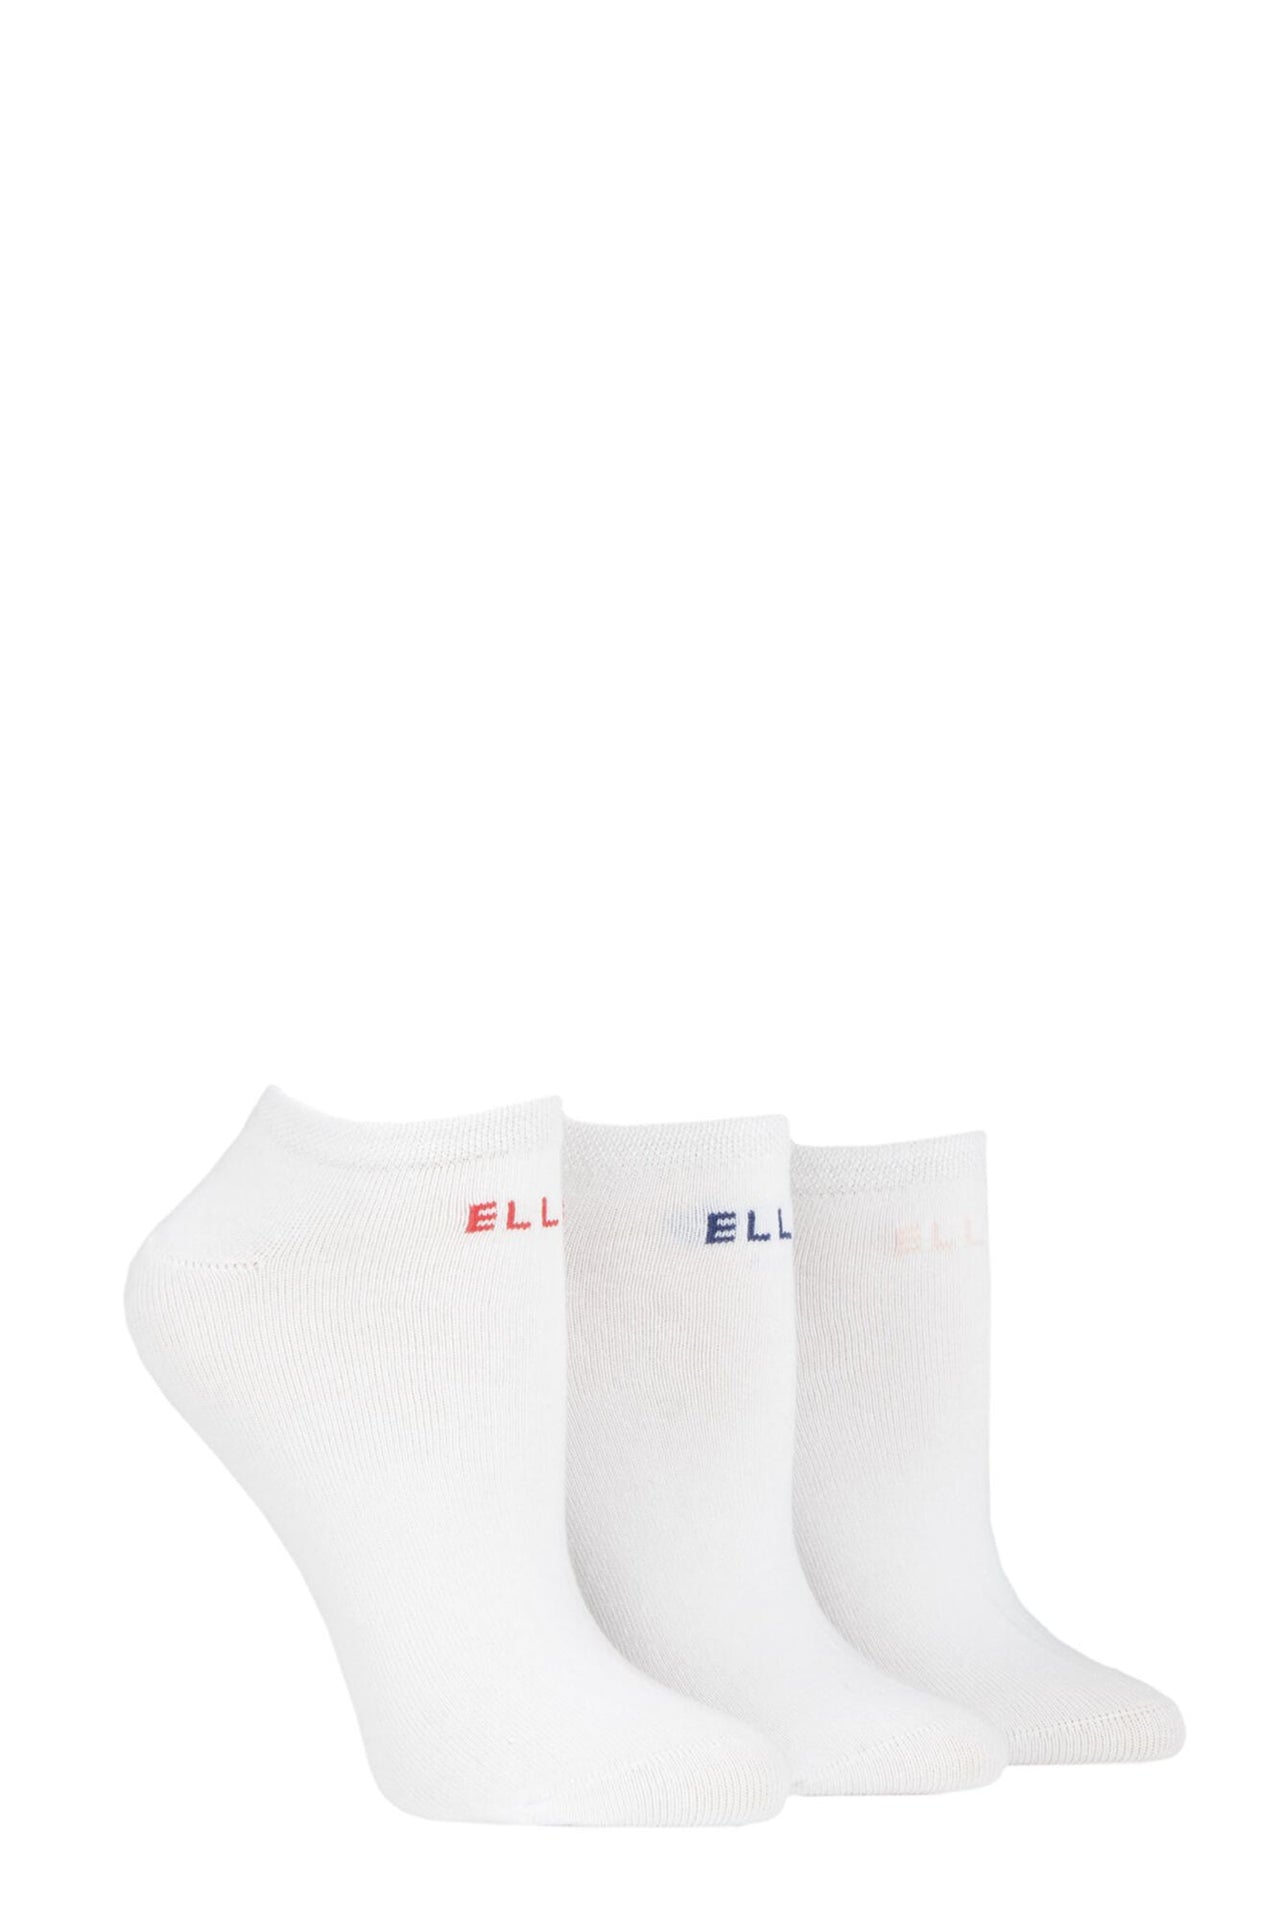 Elle No-Show Cotton Mix Trainer Socks White